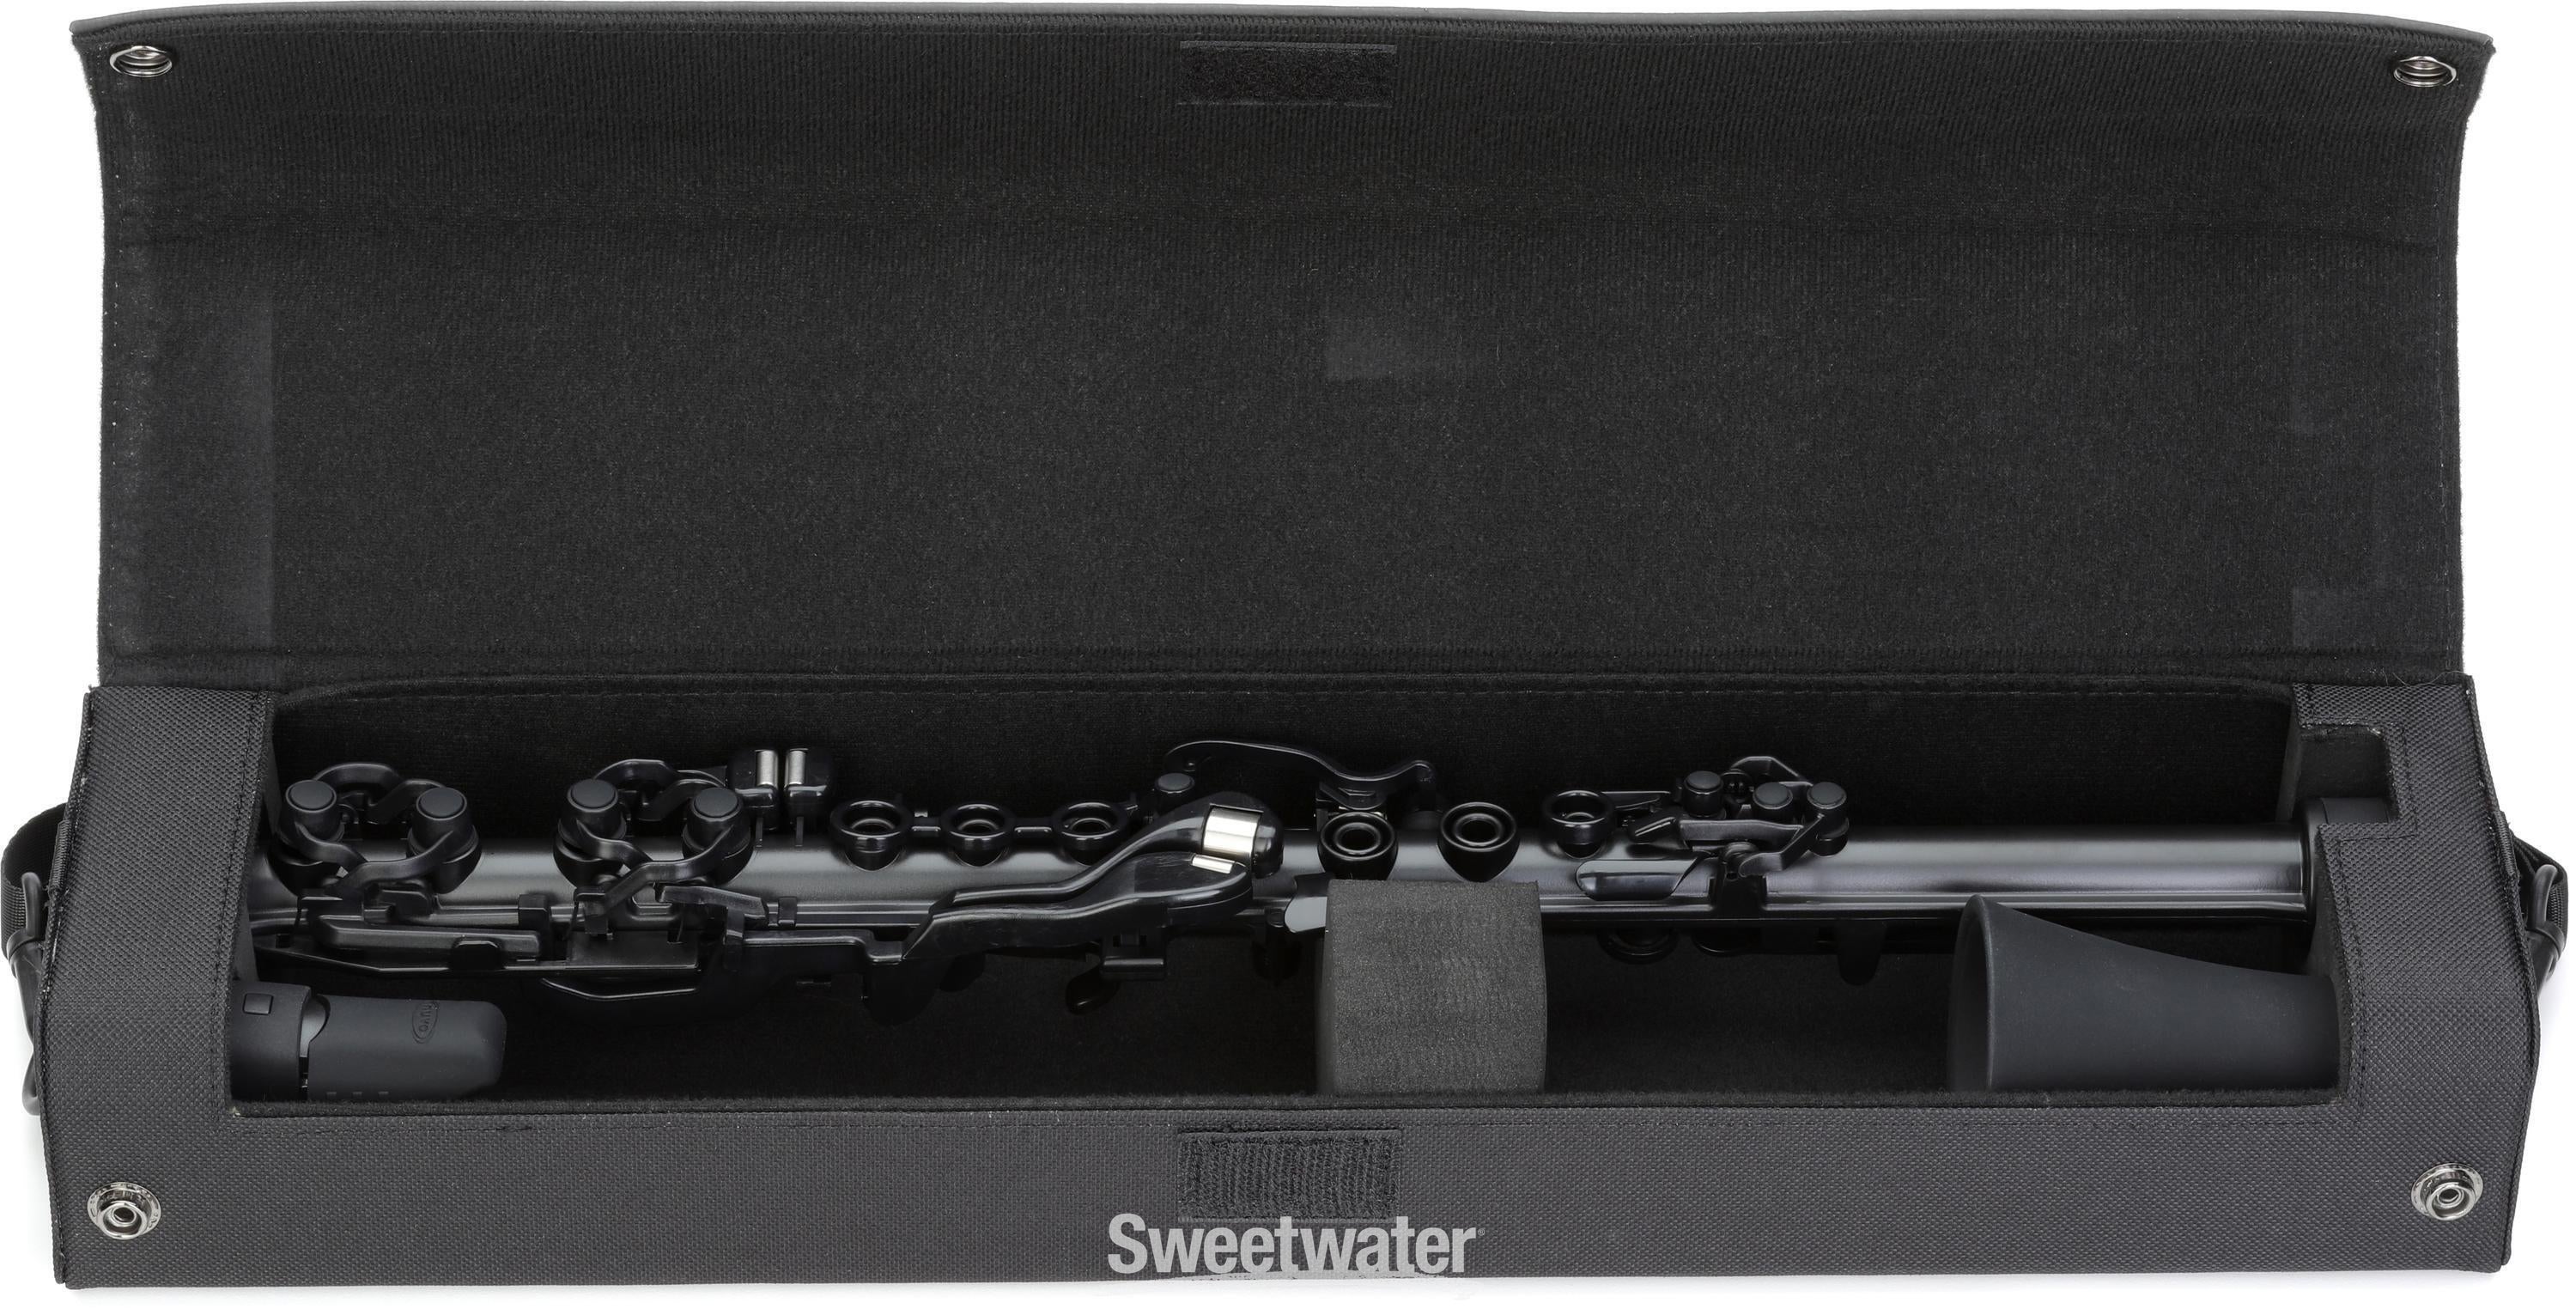 Nuvo Clarinéo Standard Kit | Sweetwater